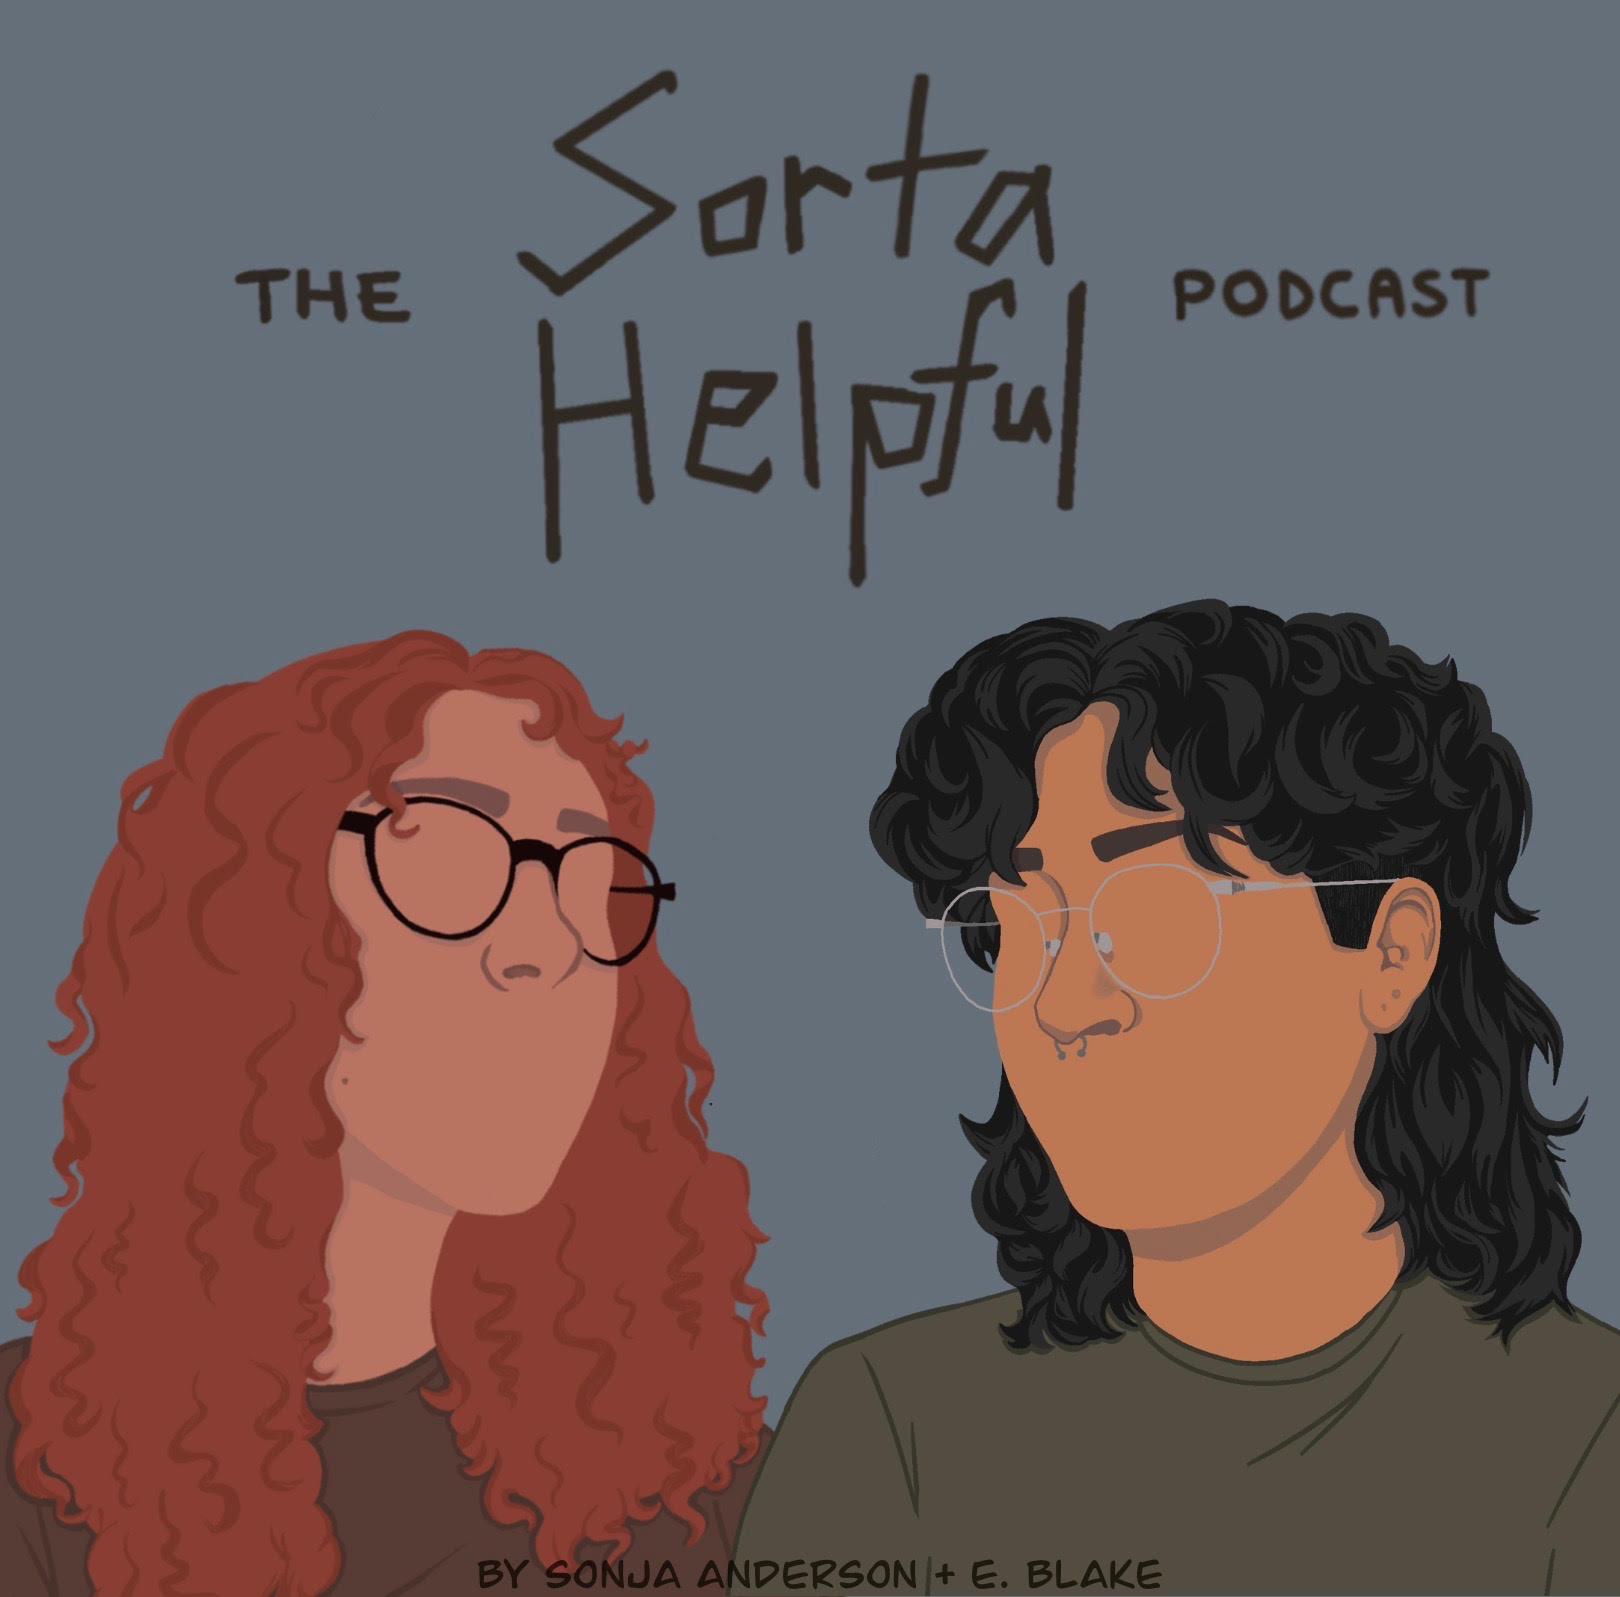 The Sorta Helpful Podcast